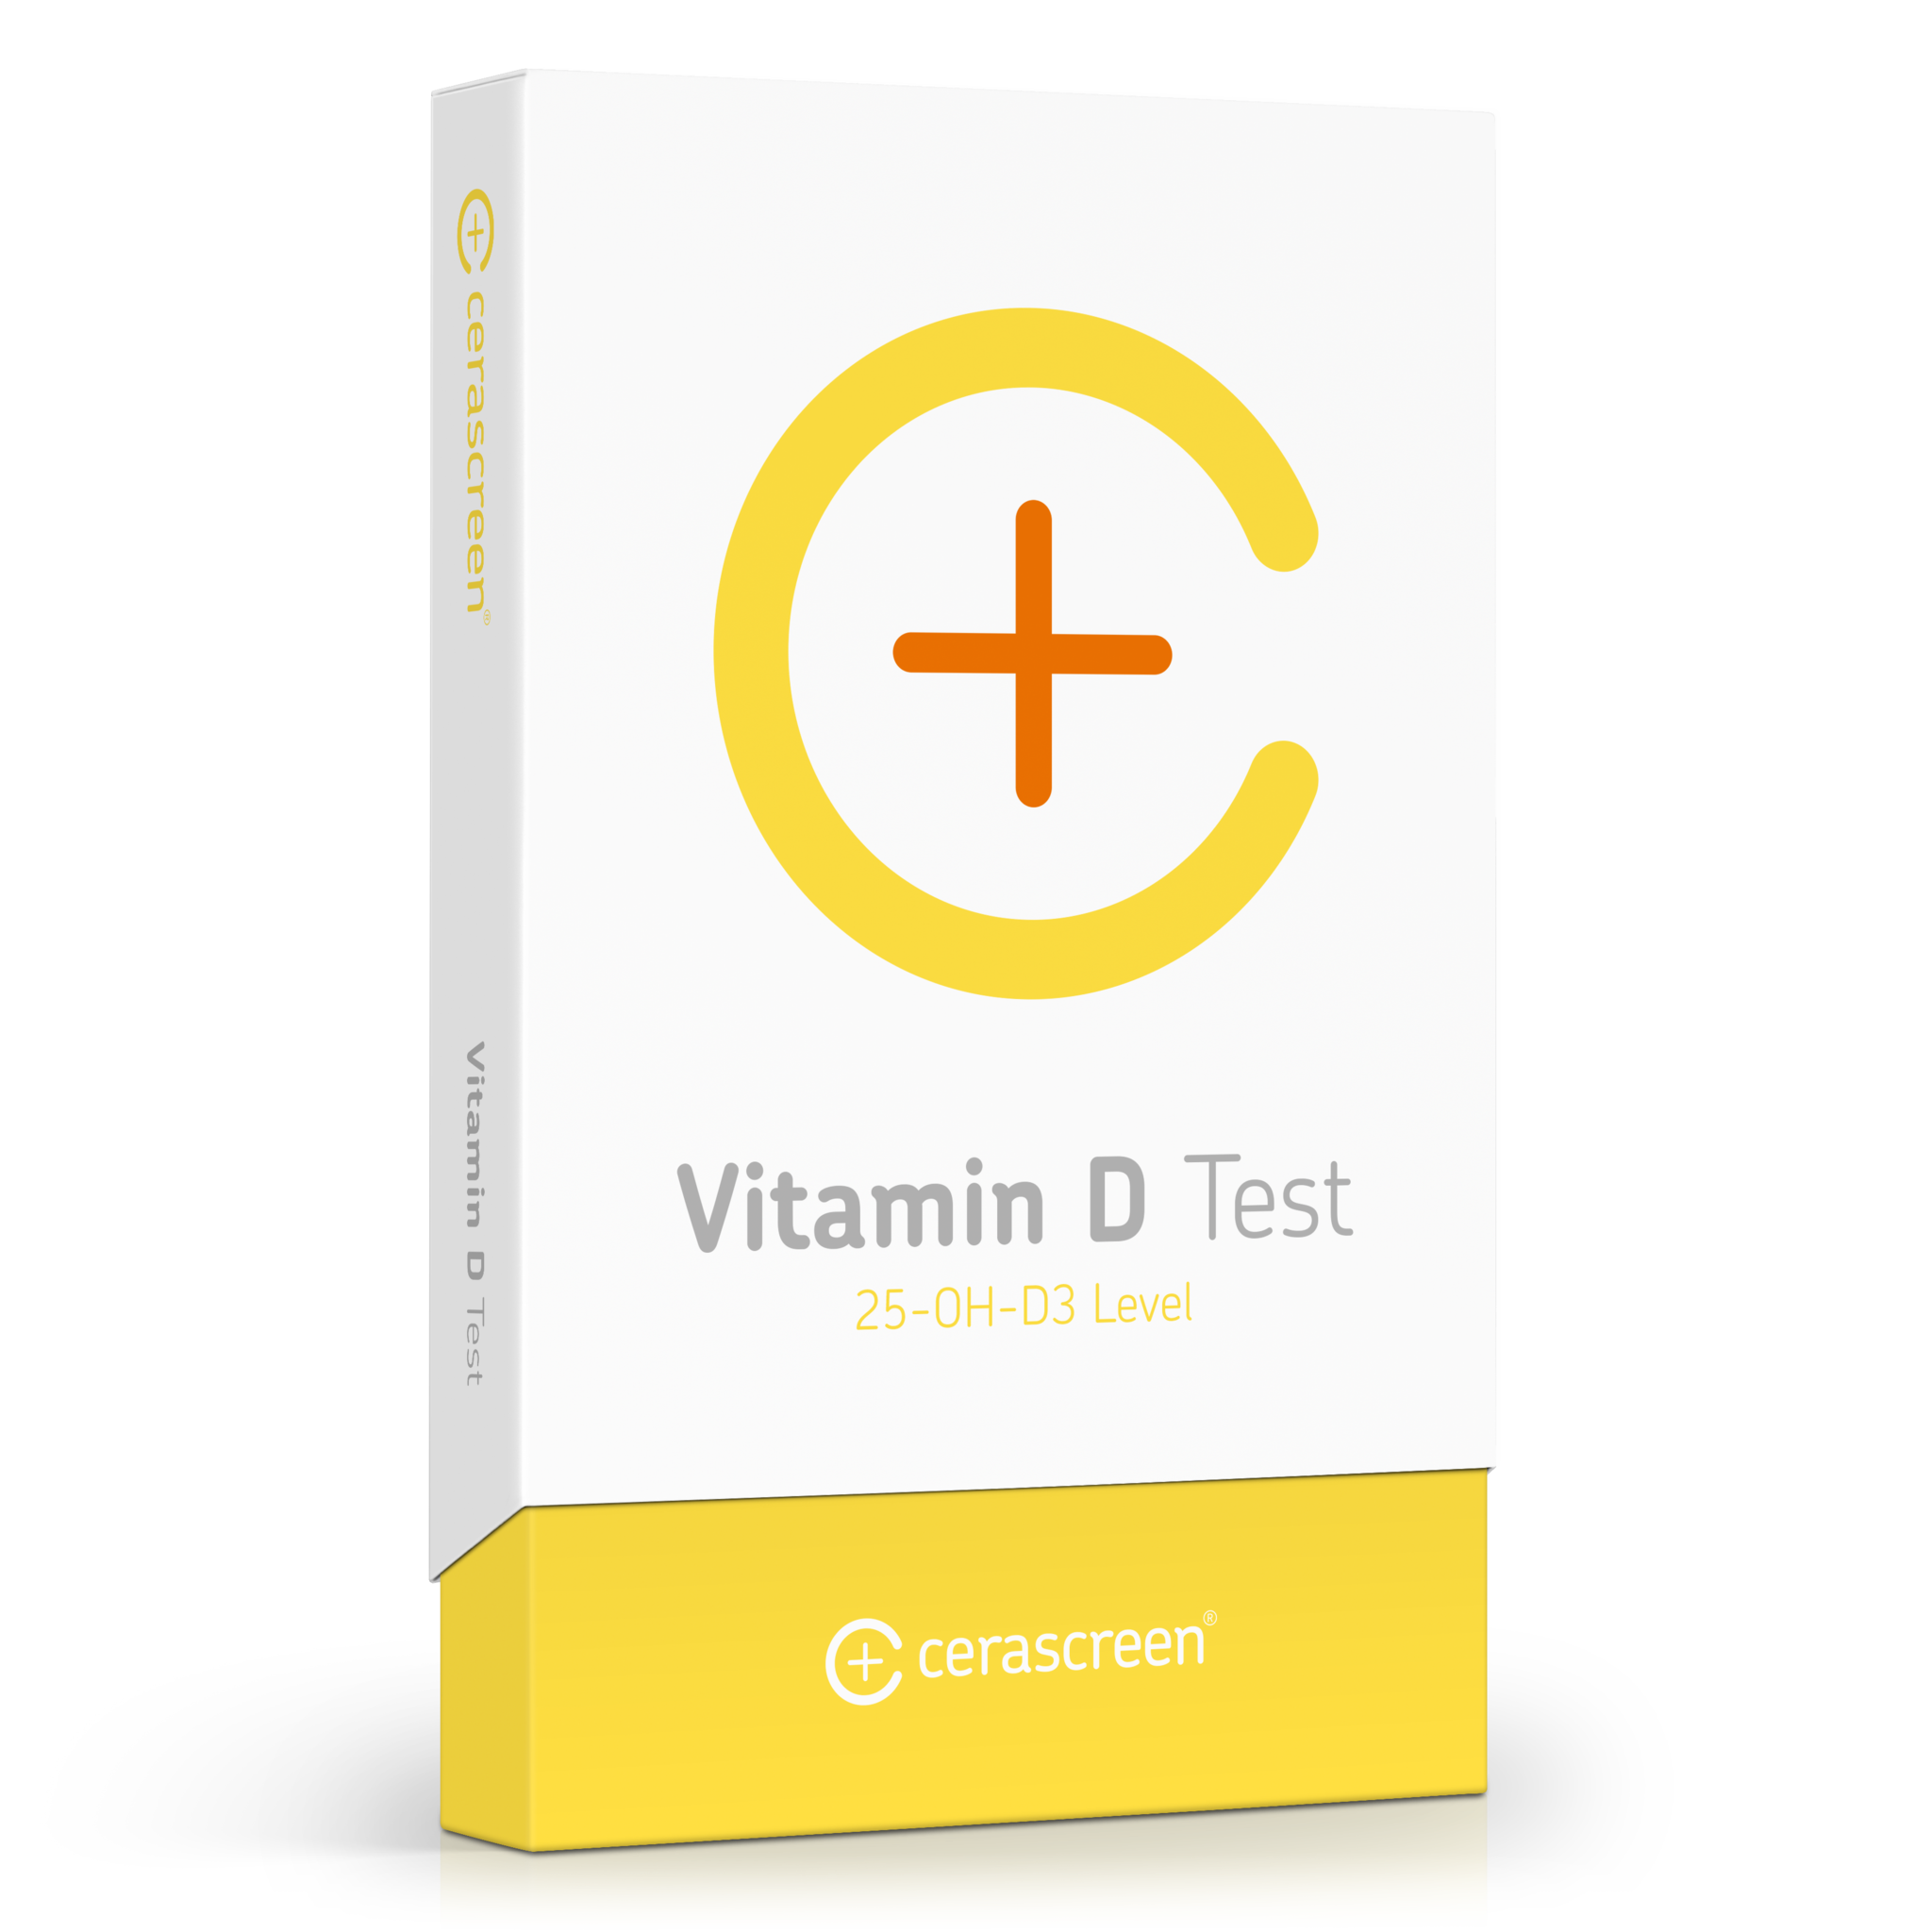 Verpackung des Vitamin D Tests